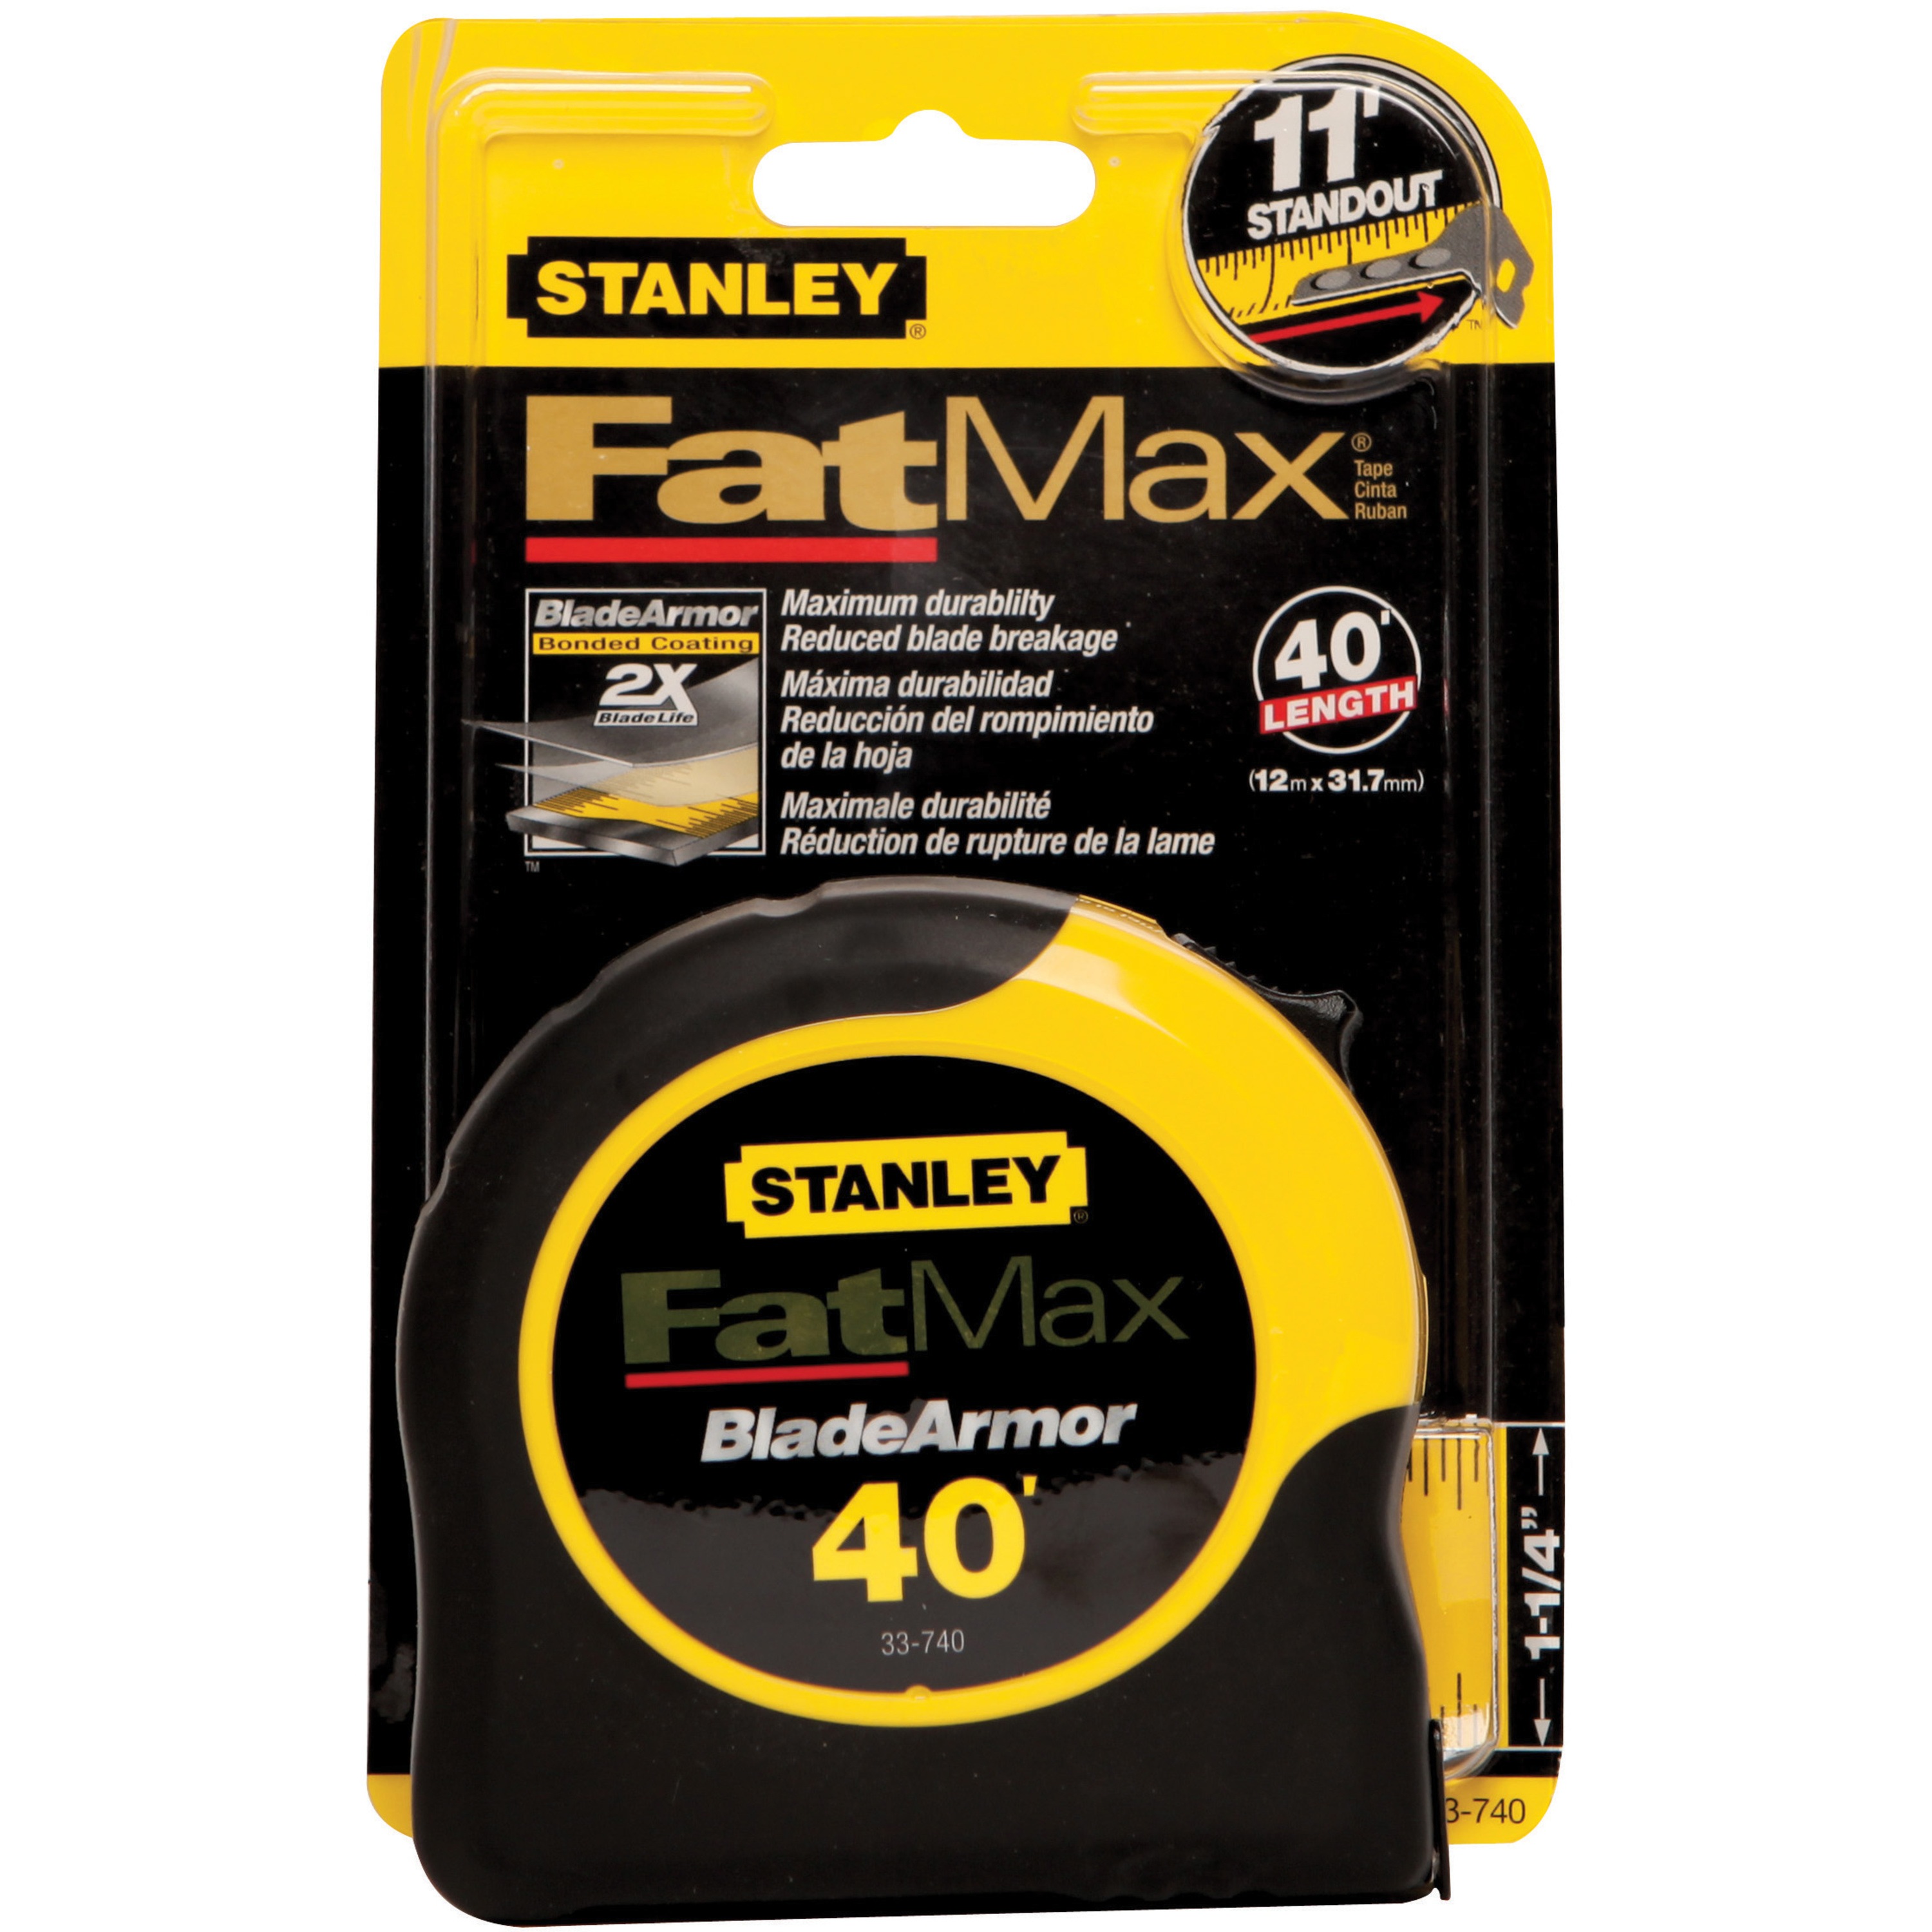 Stanley Tools - 40 ft FATMAX Classic Tape Measure - 33-740